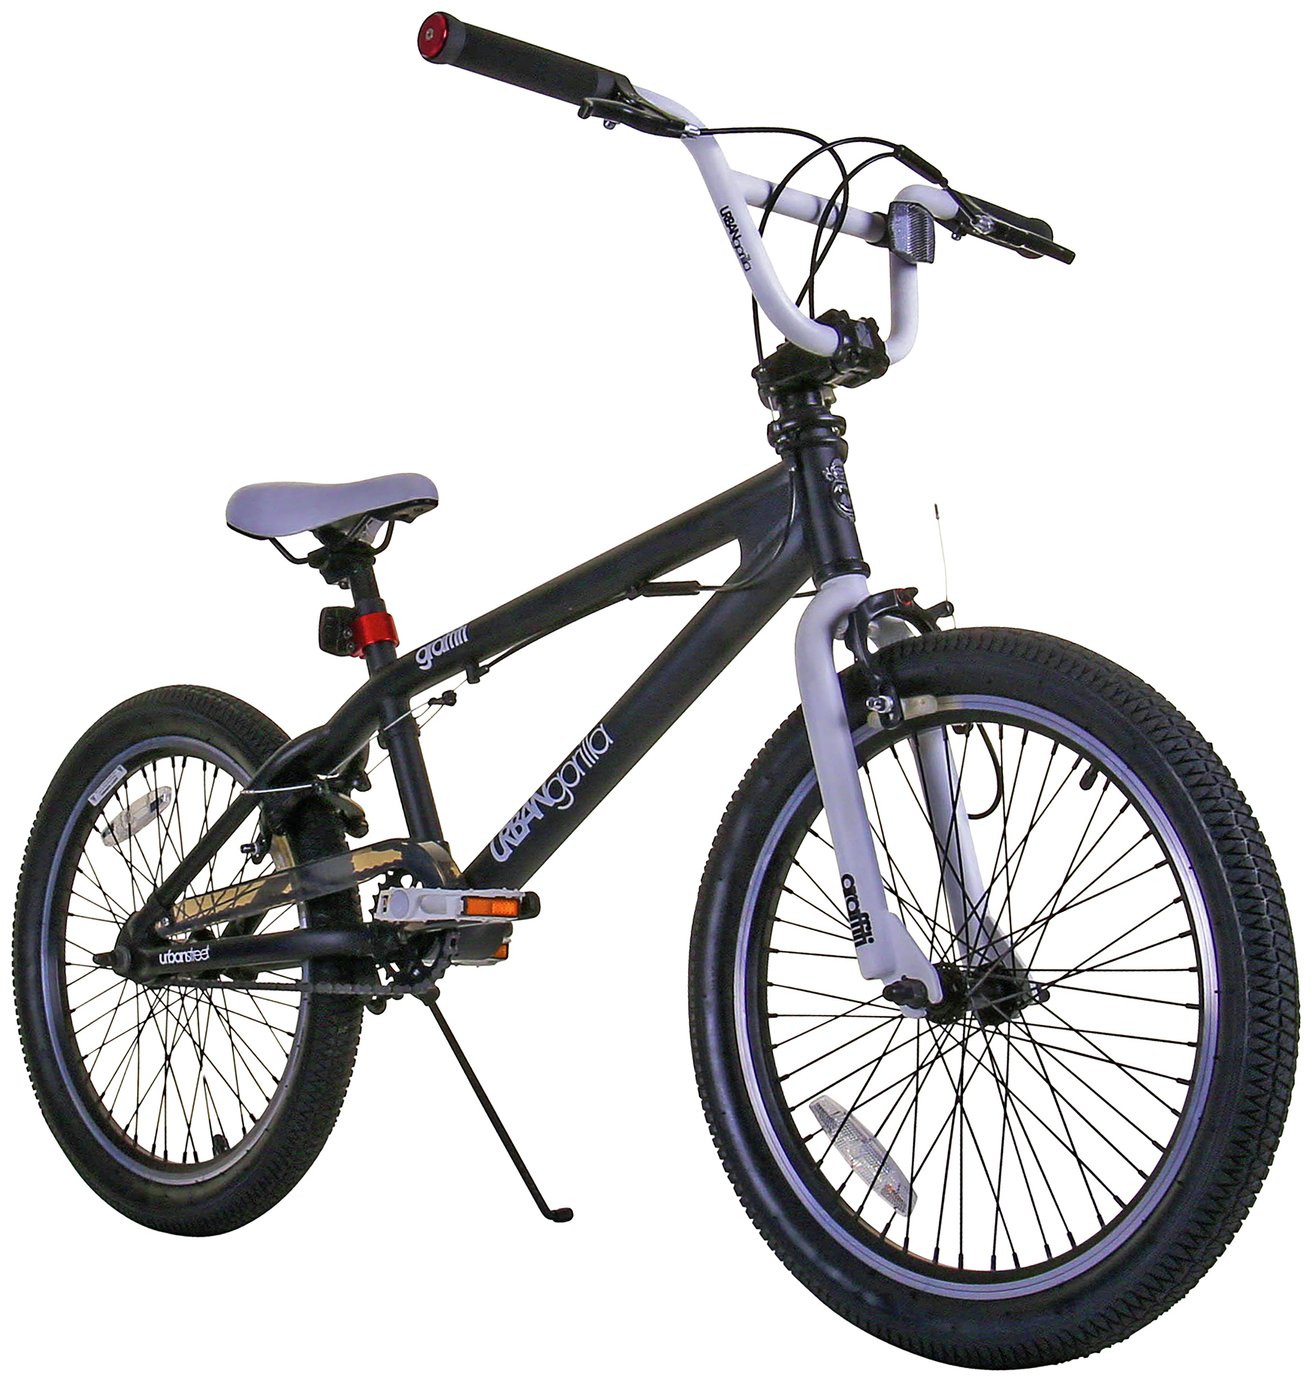 Urban Gorilla 20 Inch Wheel Size Graffiti BMX Bike